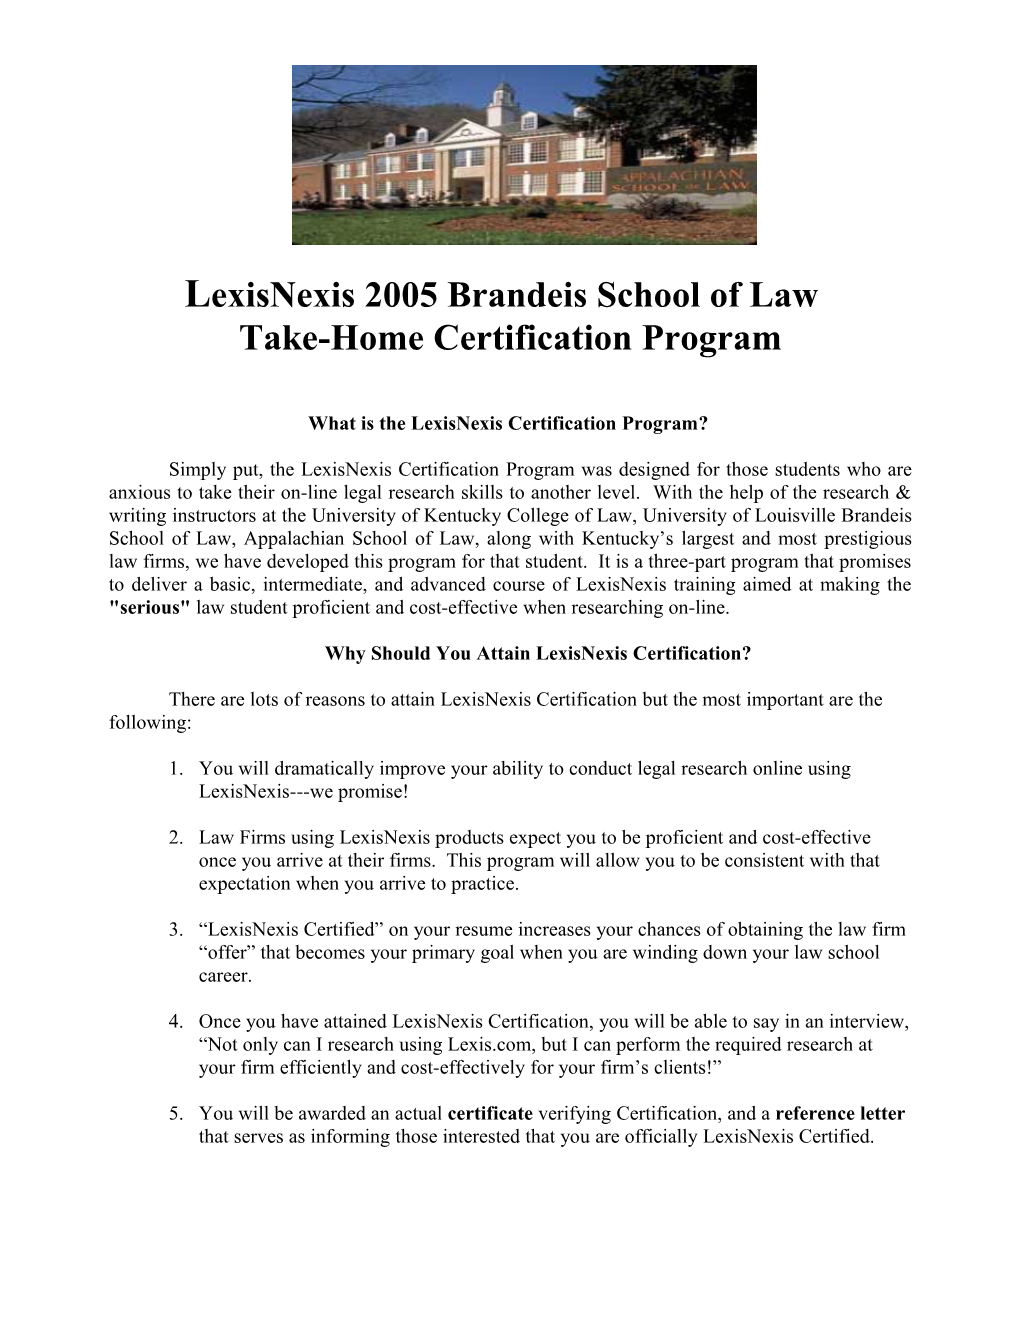 Lexisnexis Take-Home Lexis Certification Program